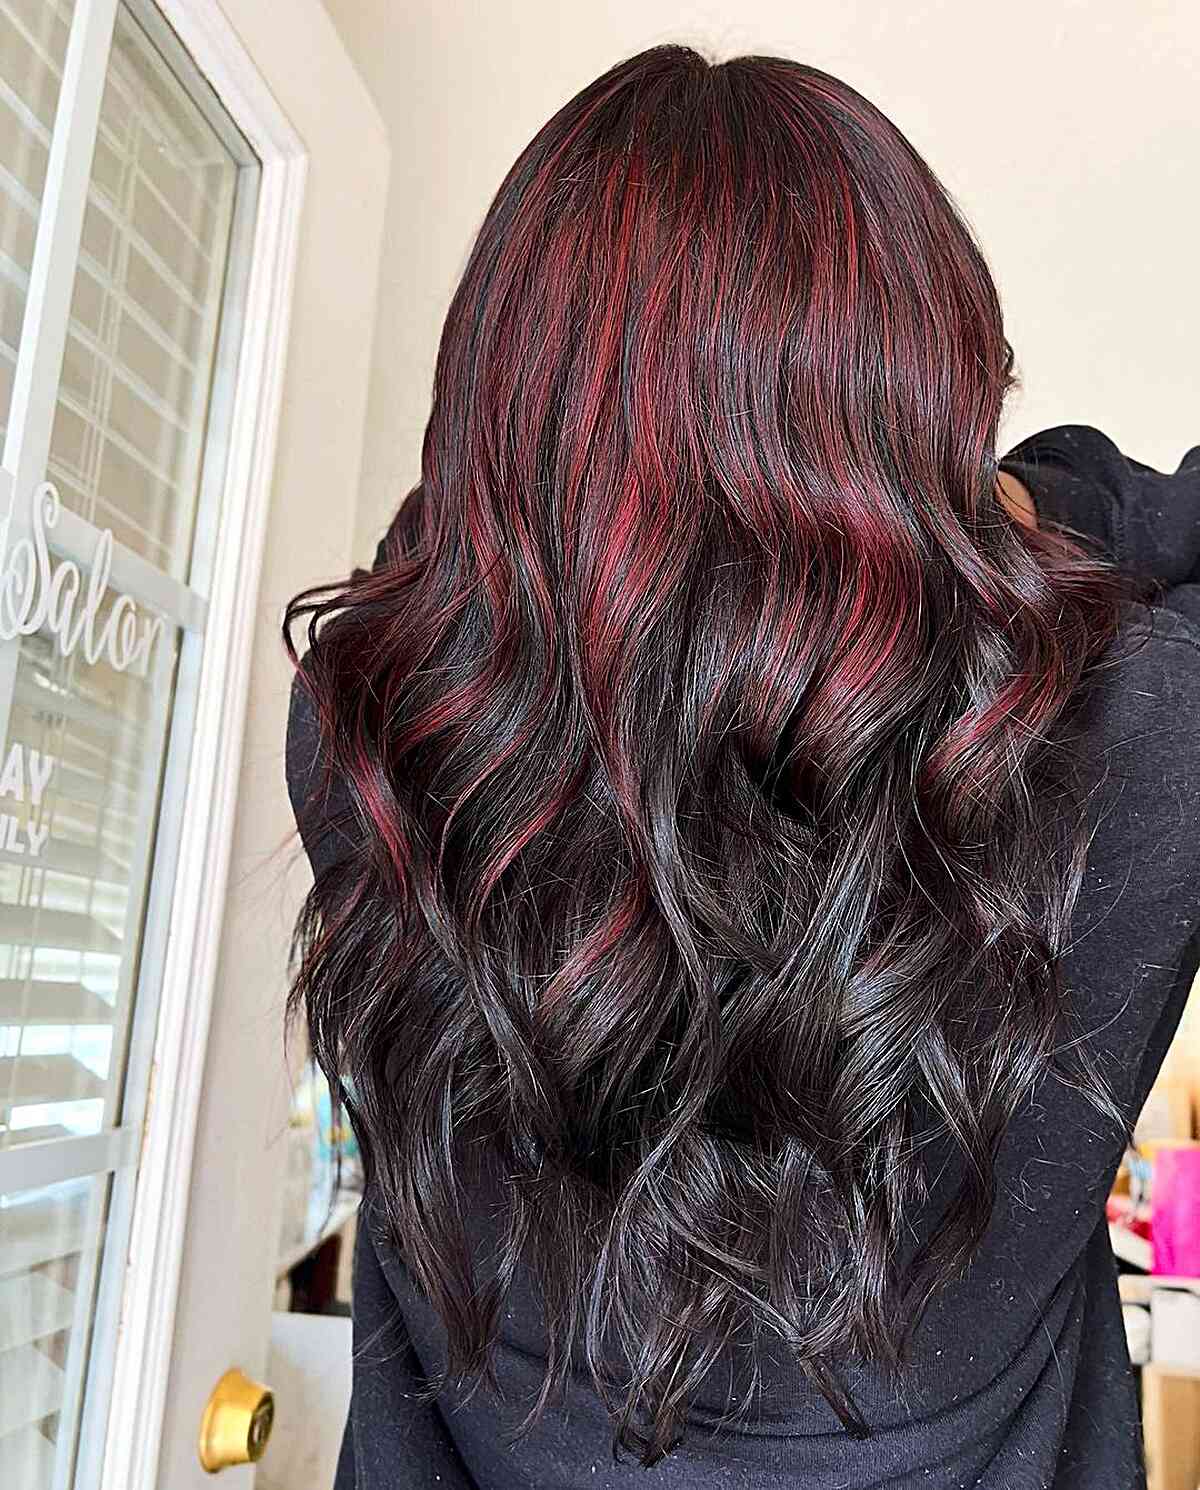 Bold Red Partial Highlights on Long Wavy Dark Hair